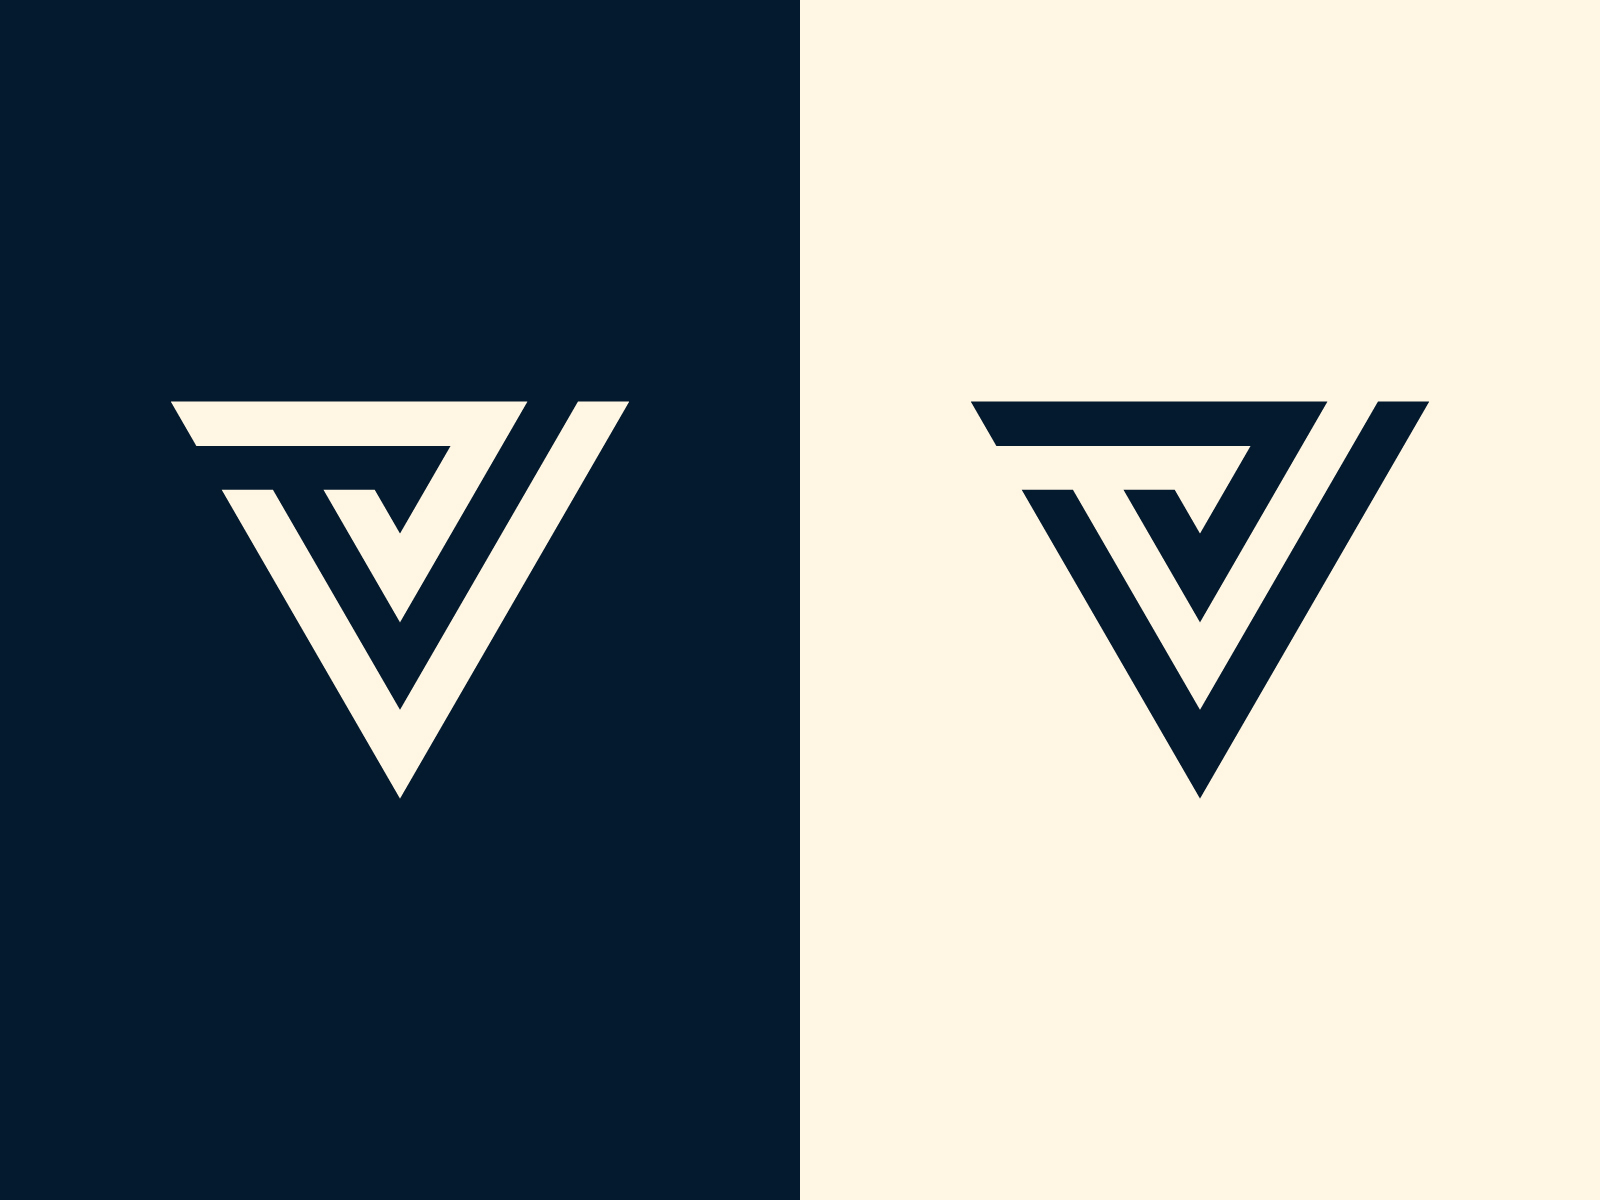 Vt V T Letter Logo Vector & Photo (Free Trial) | Bigstock